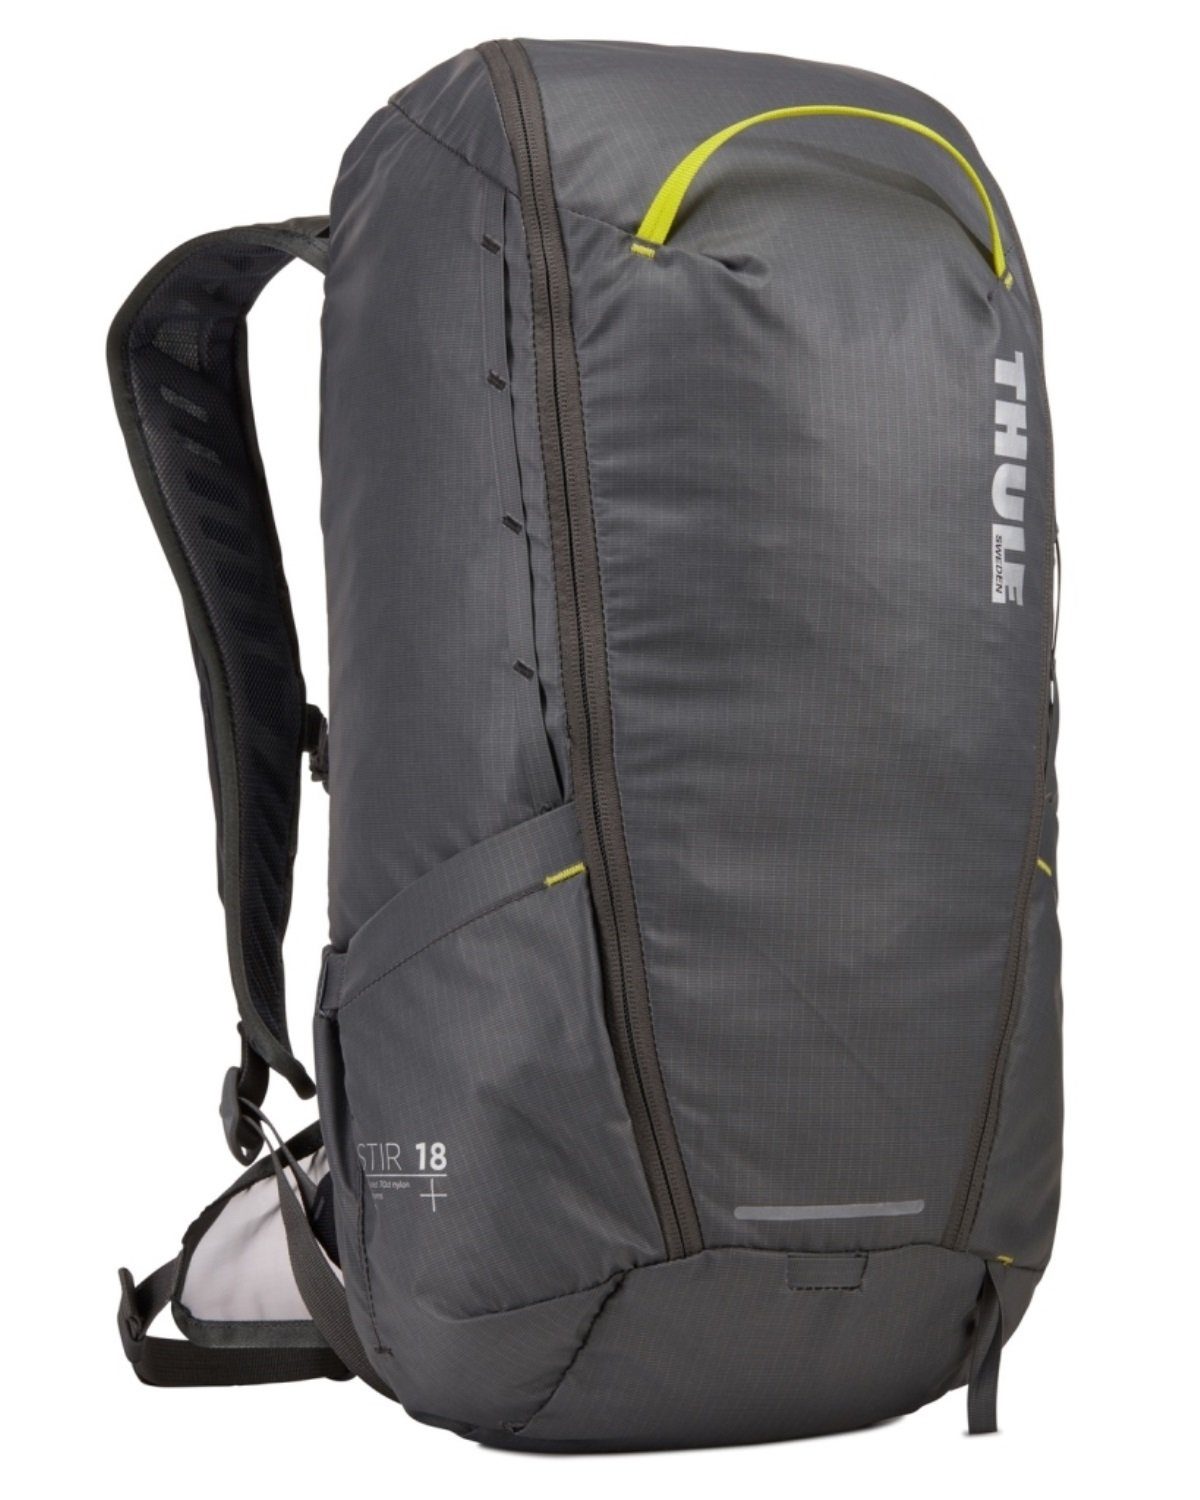 Thule Wanderrucksack Stir 18L Backpack Rucksack Tasche Wander-Rucksack, Tasche am Schultergurt Schlaufenbefestigungspunkt atmungsaktiv | Wanderrucksäcke